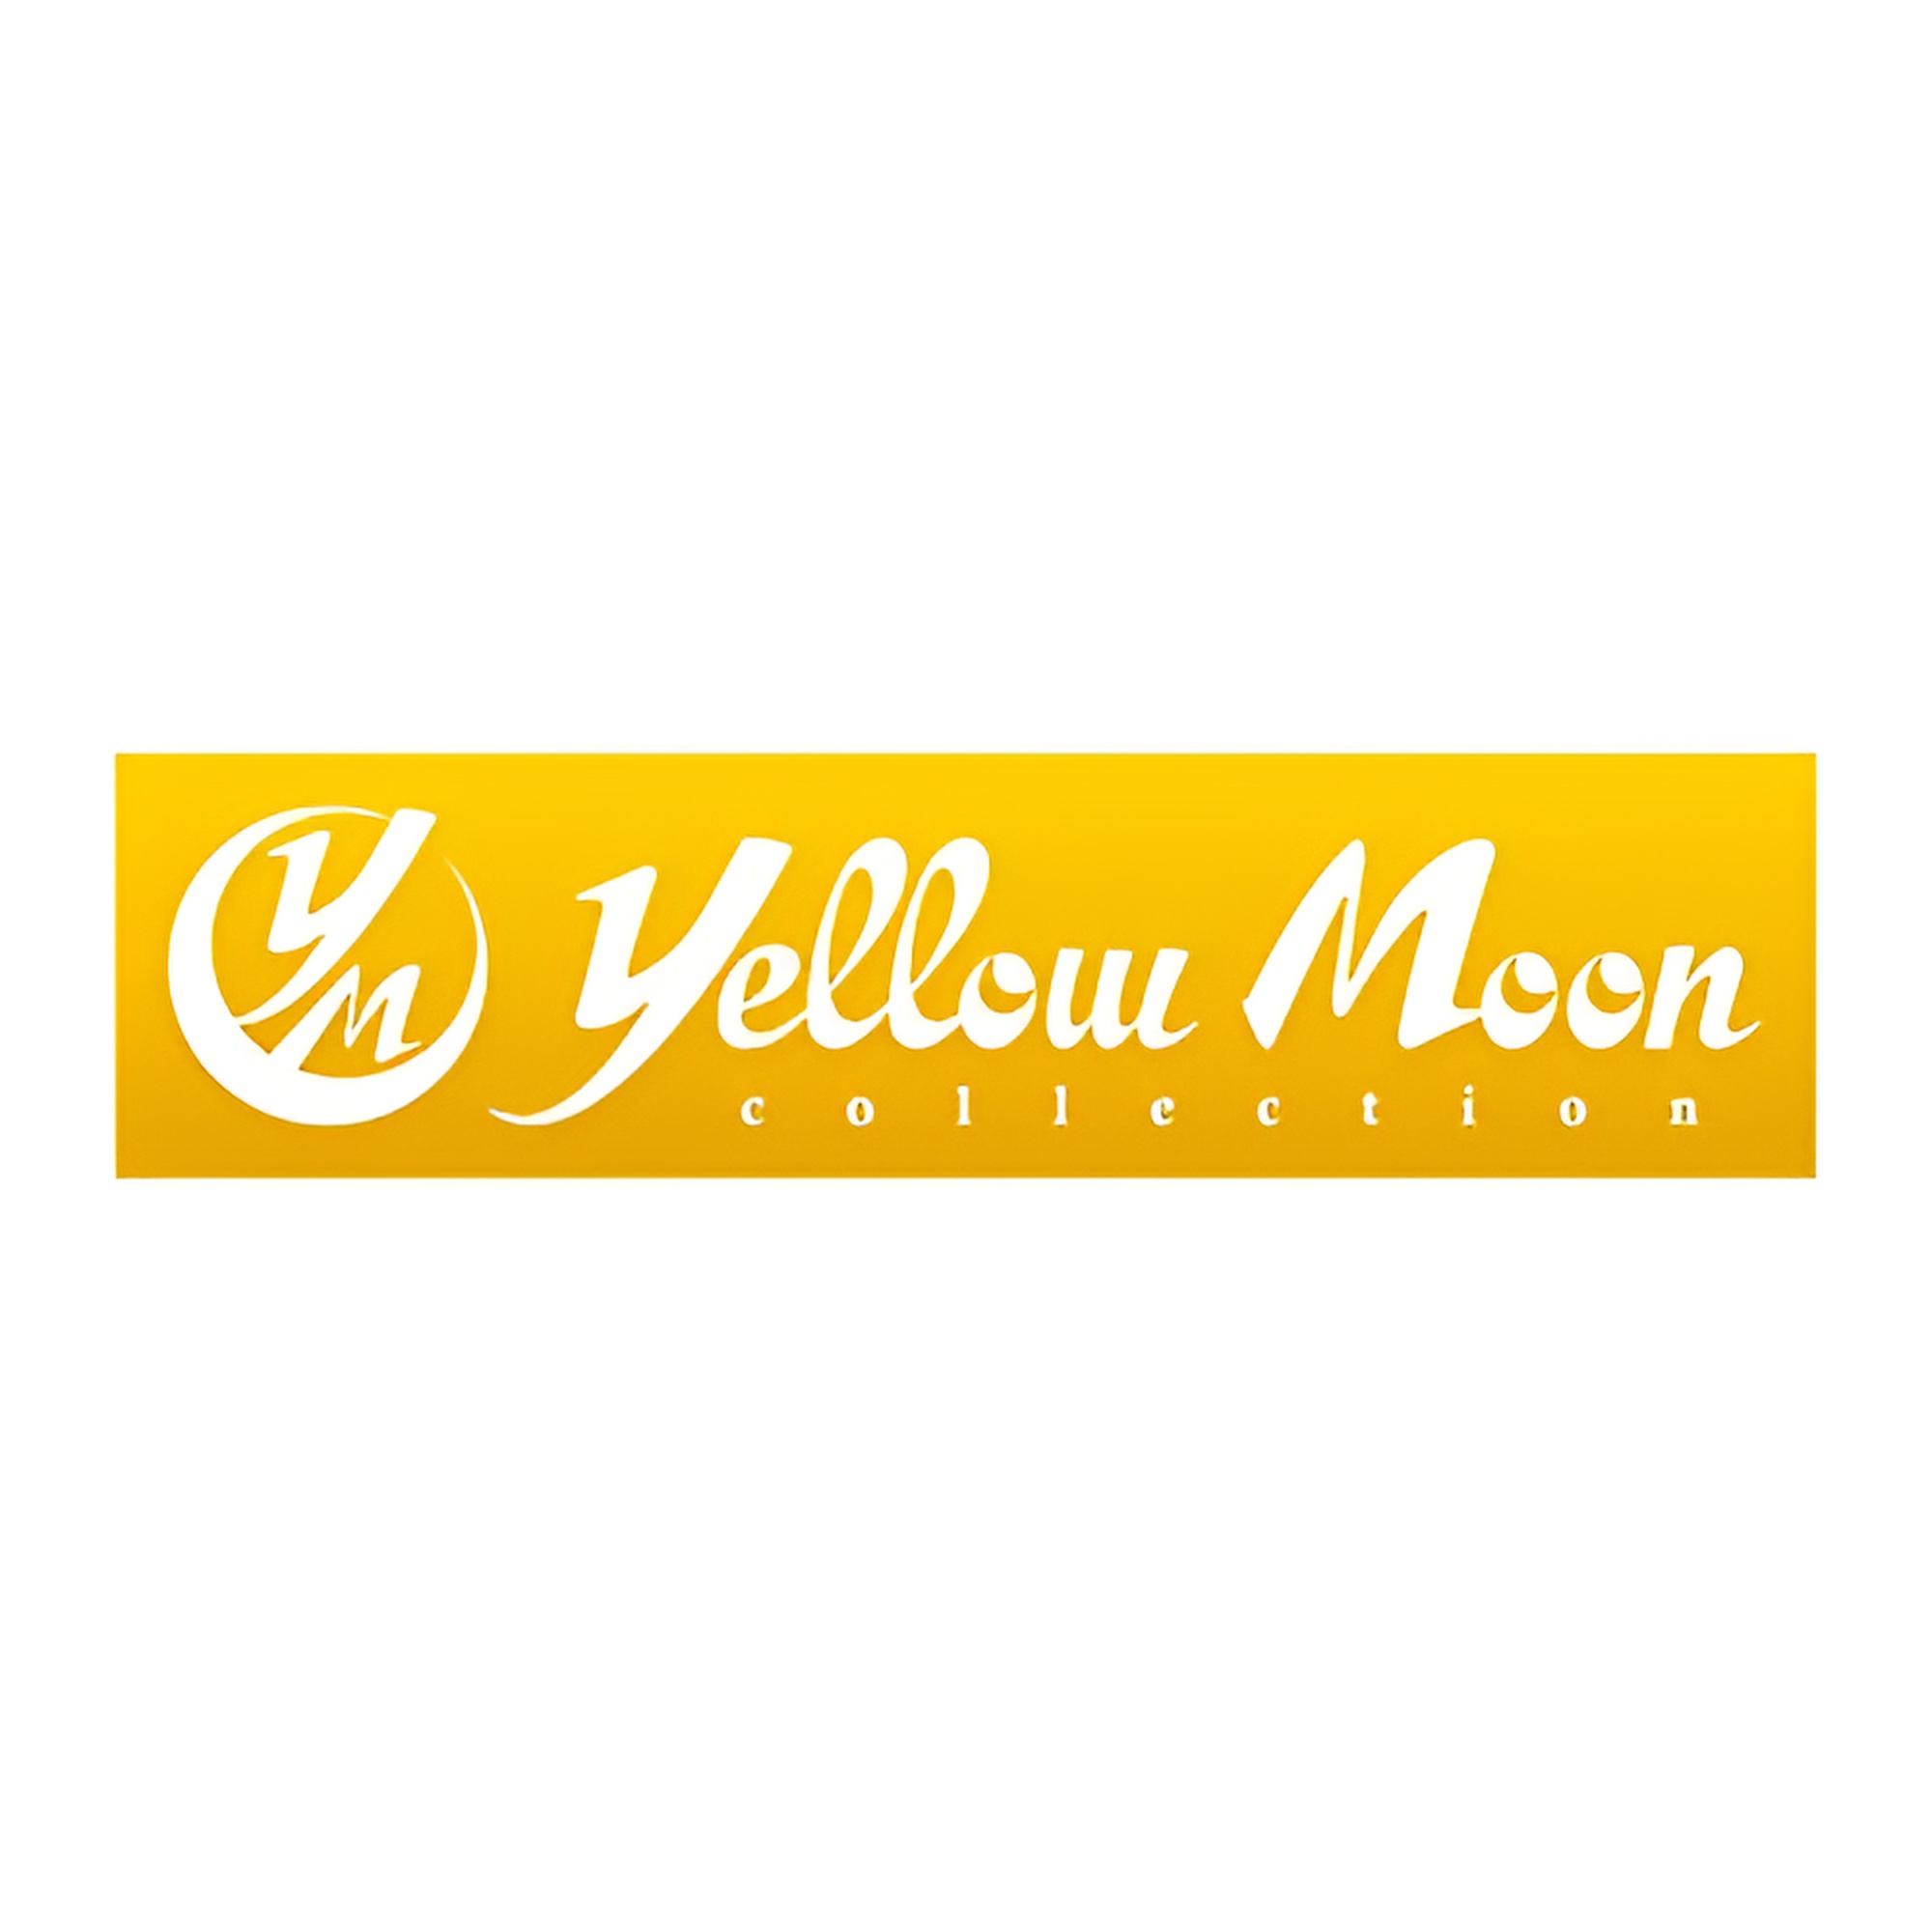 Yellow Moon